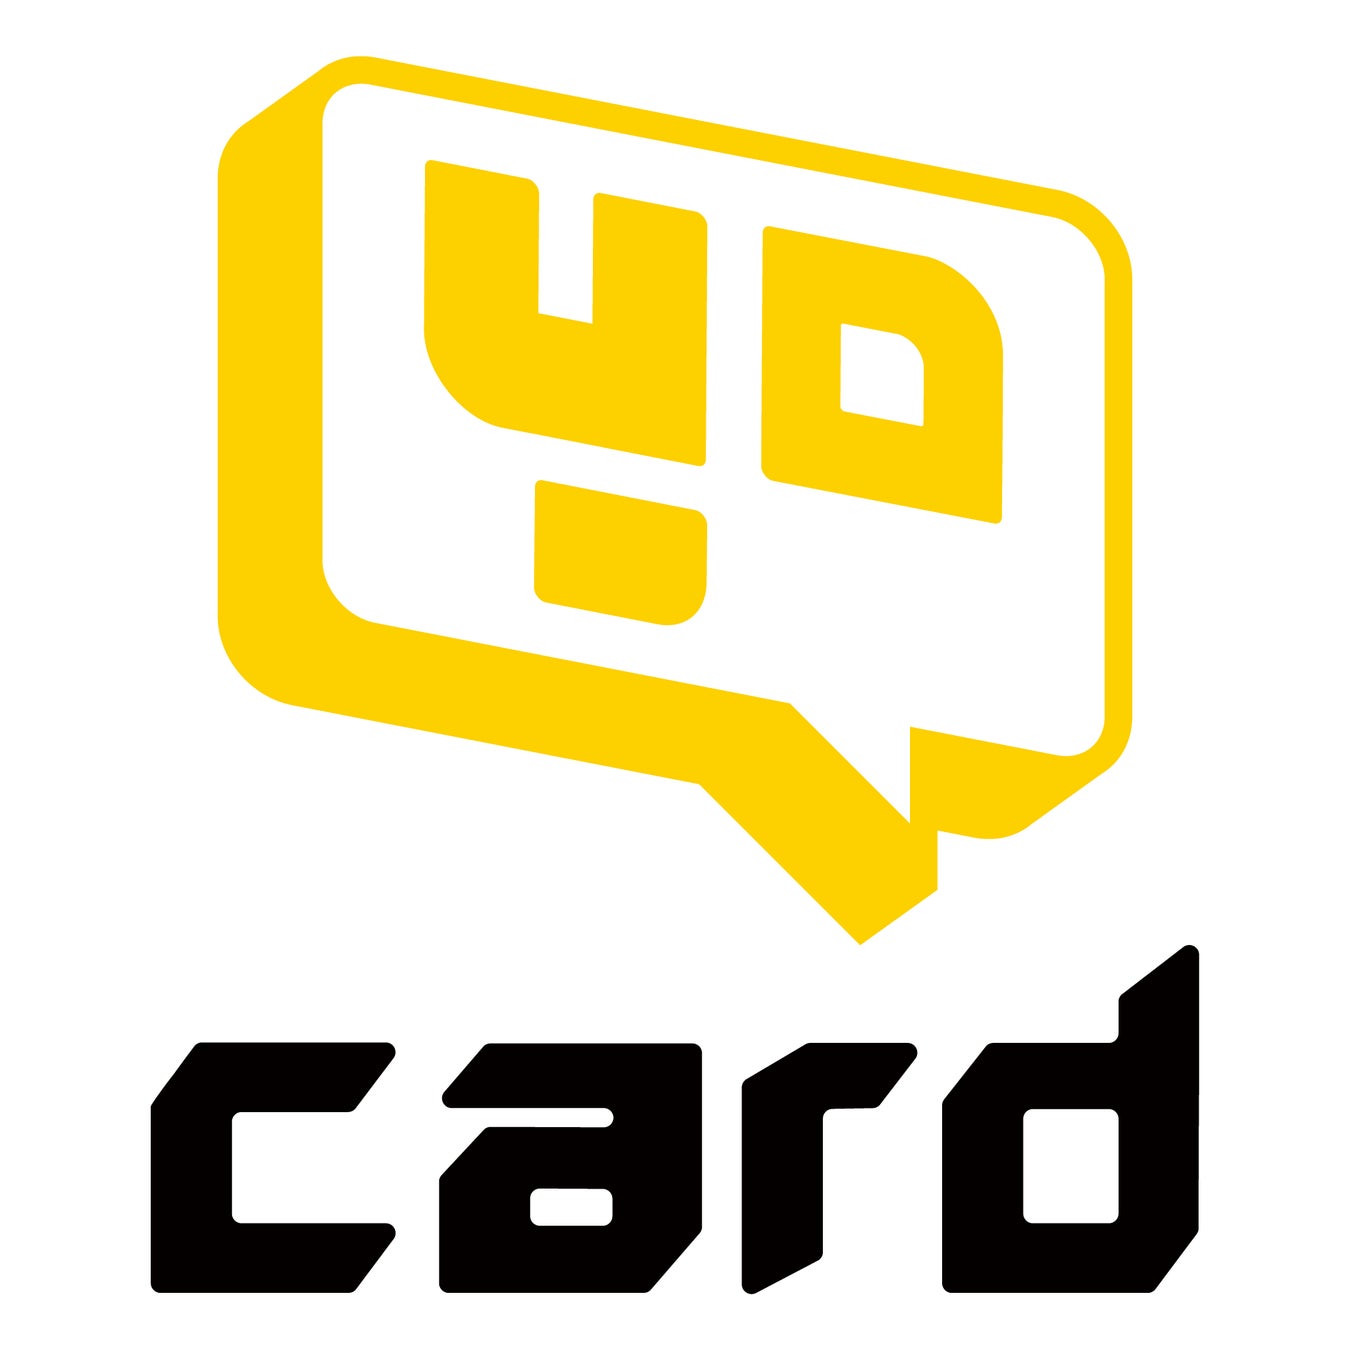 Yoren中国上海にトレーディングカードショップ「Yocard」をオープン